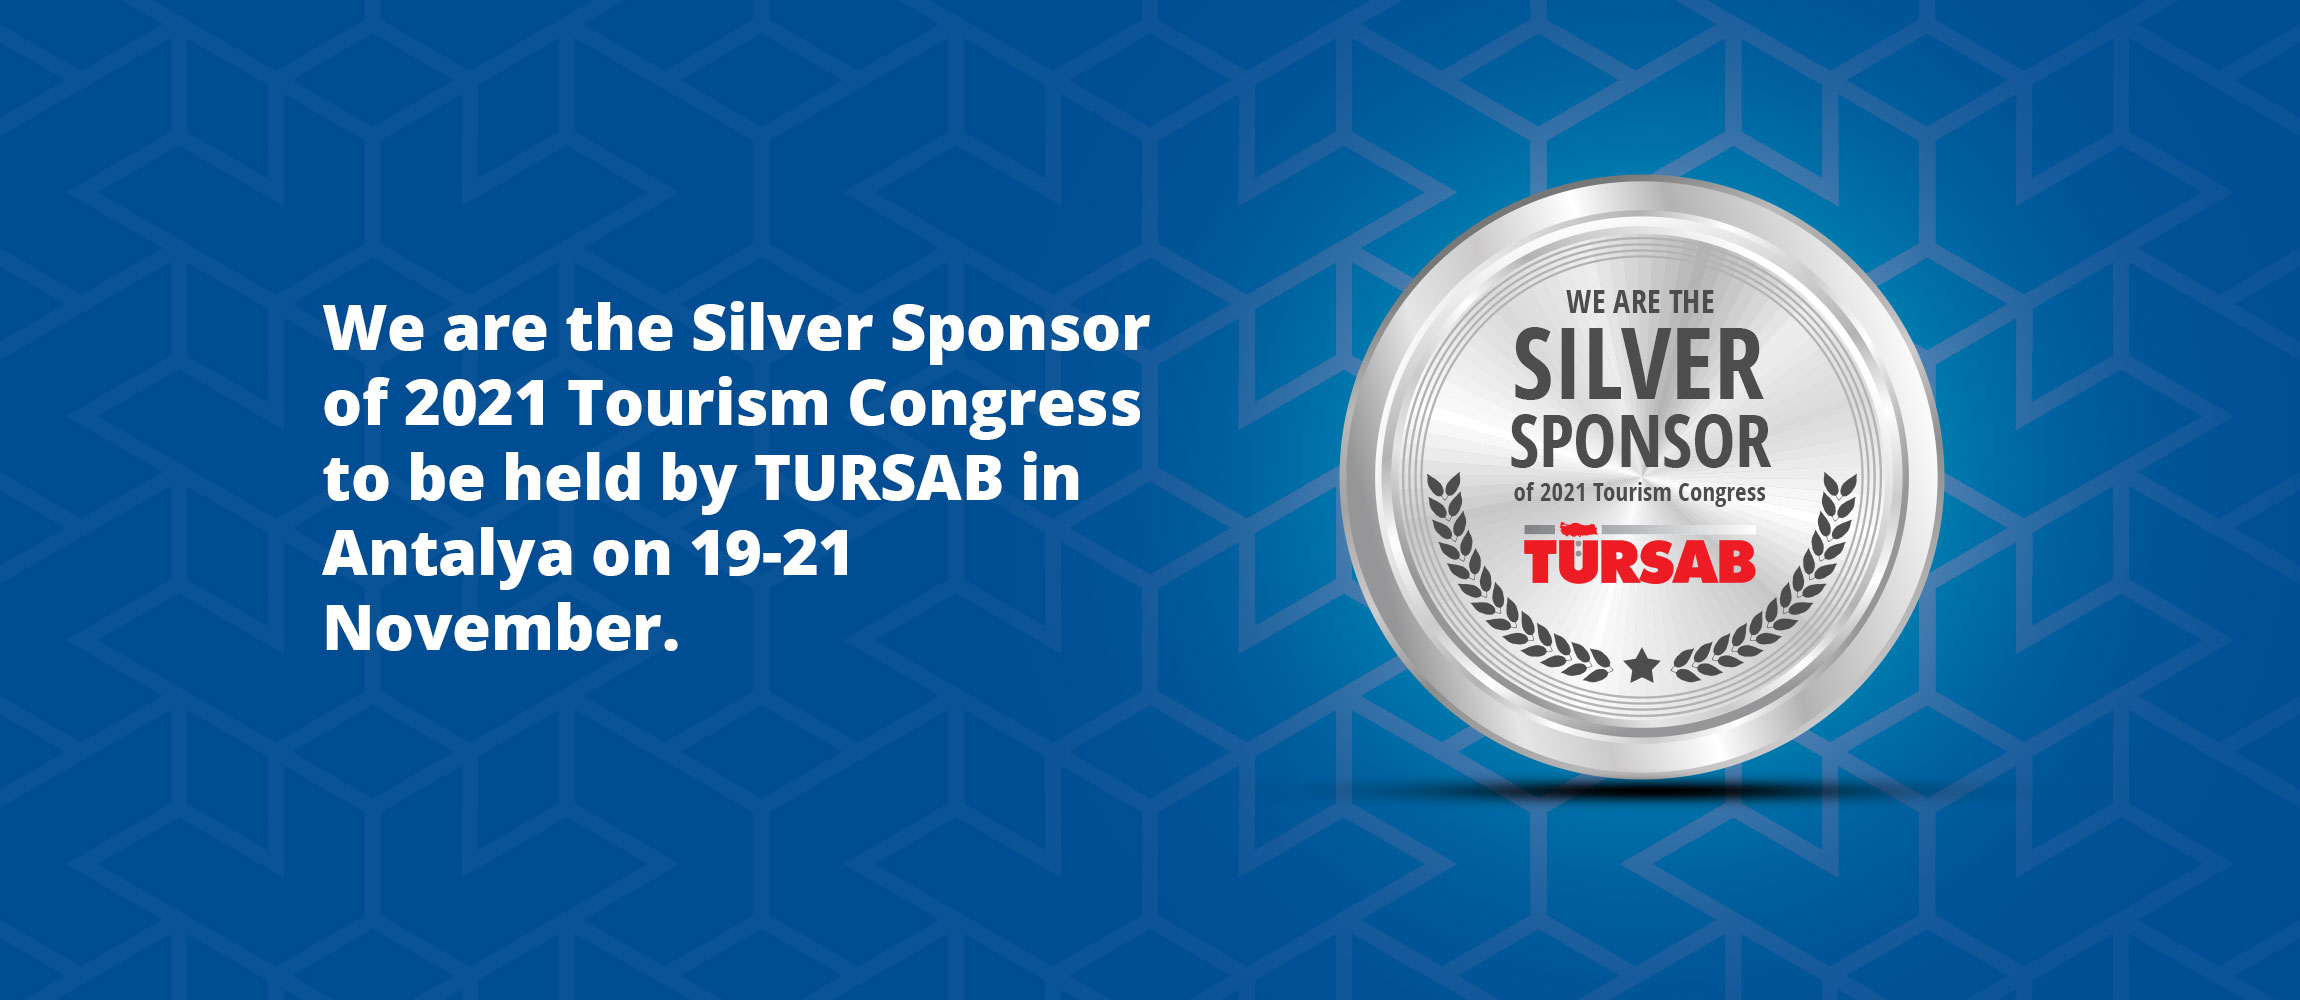 Türsab - Silver Sponsor